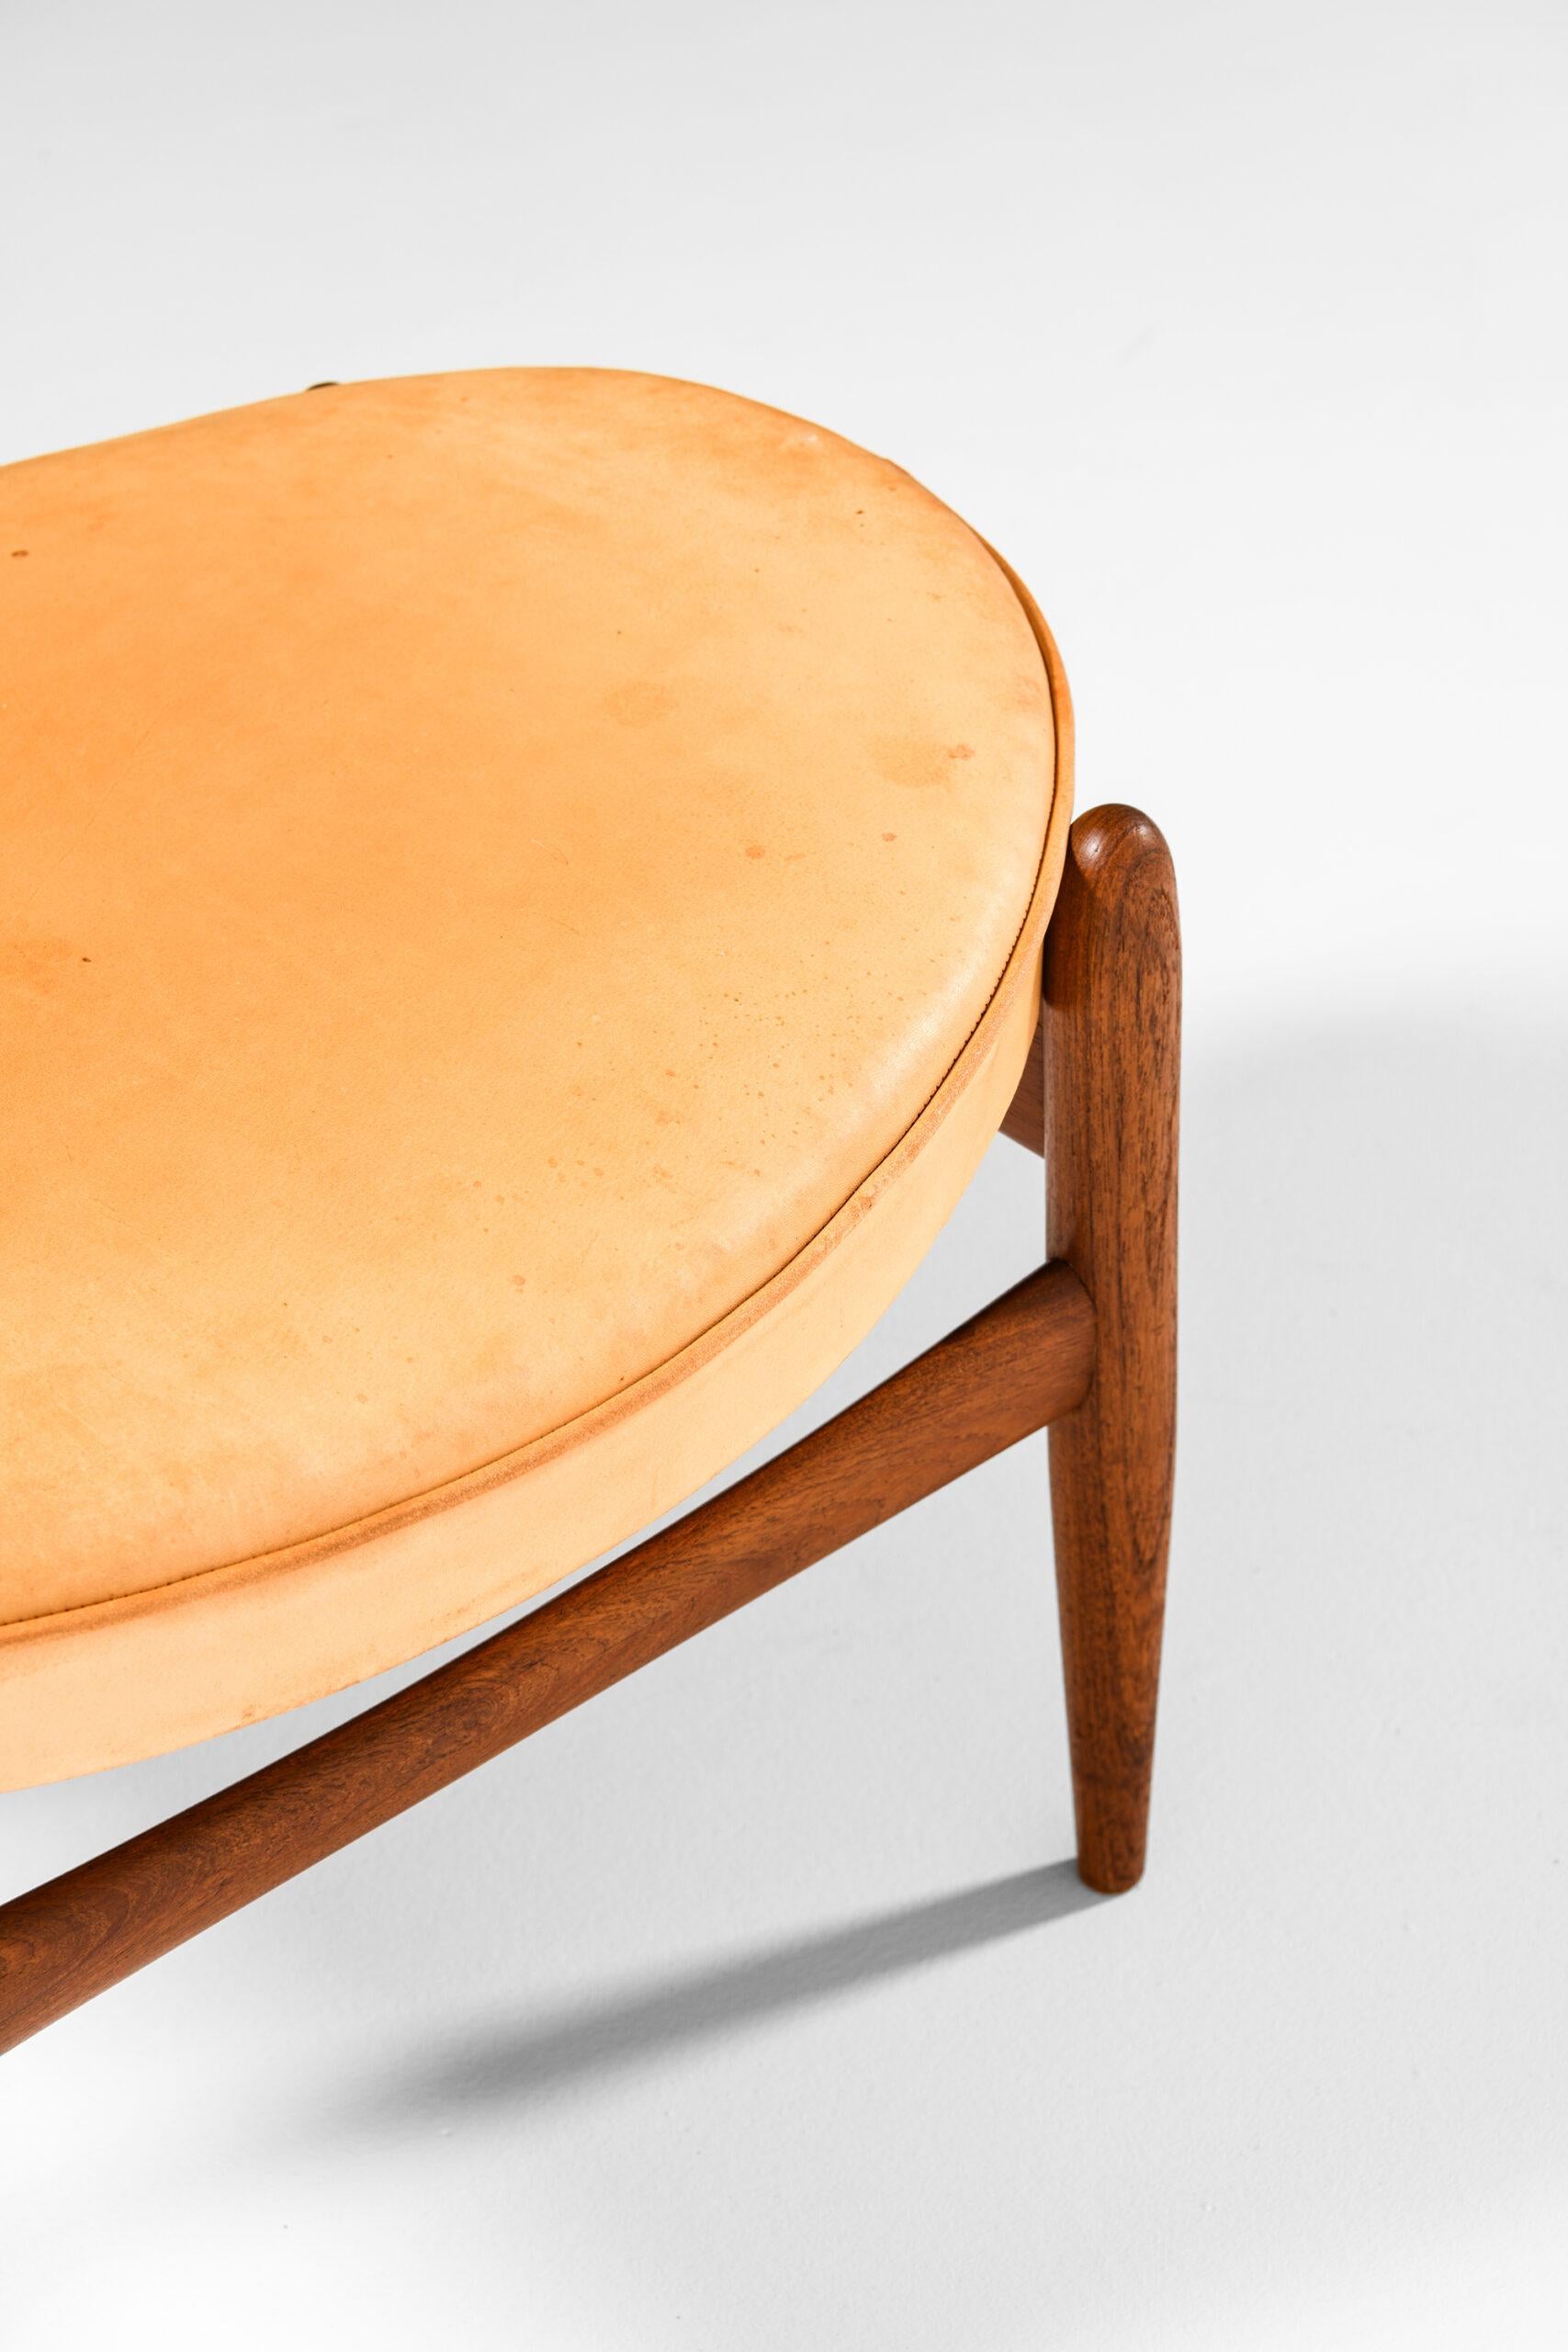 Very rare stool model Elizabeth designed by Ib Kofod-Larsen. Produced by Christensen & Larsen in Denmark.